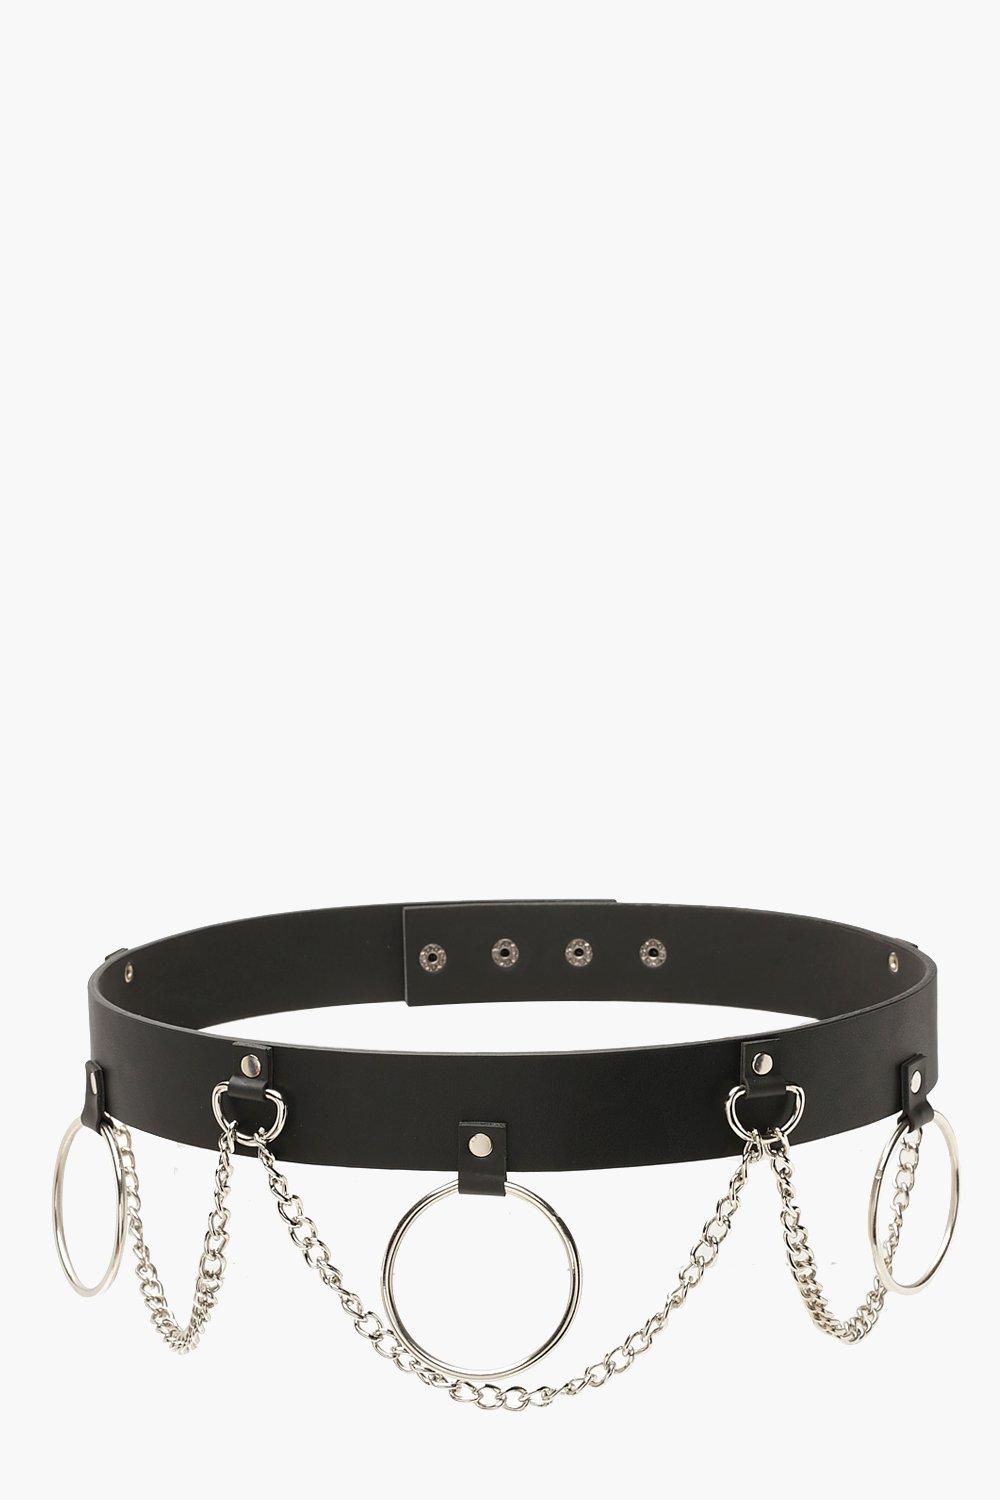 Boohoo Womens Ring & Chain Detail Waist Belt - Black - One Size